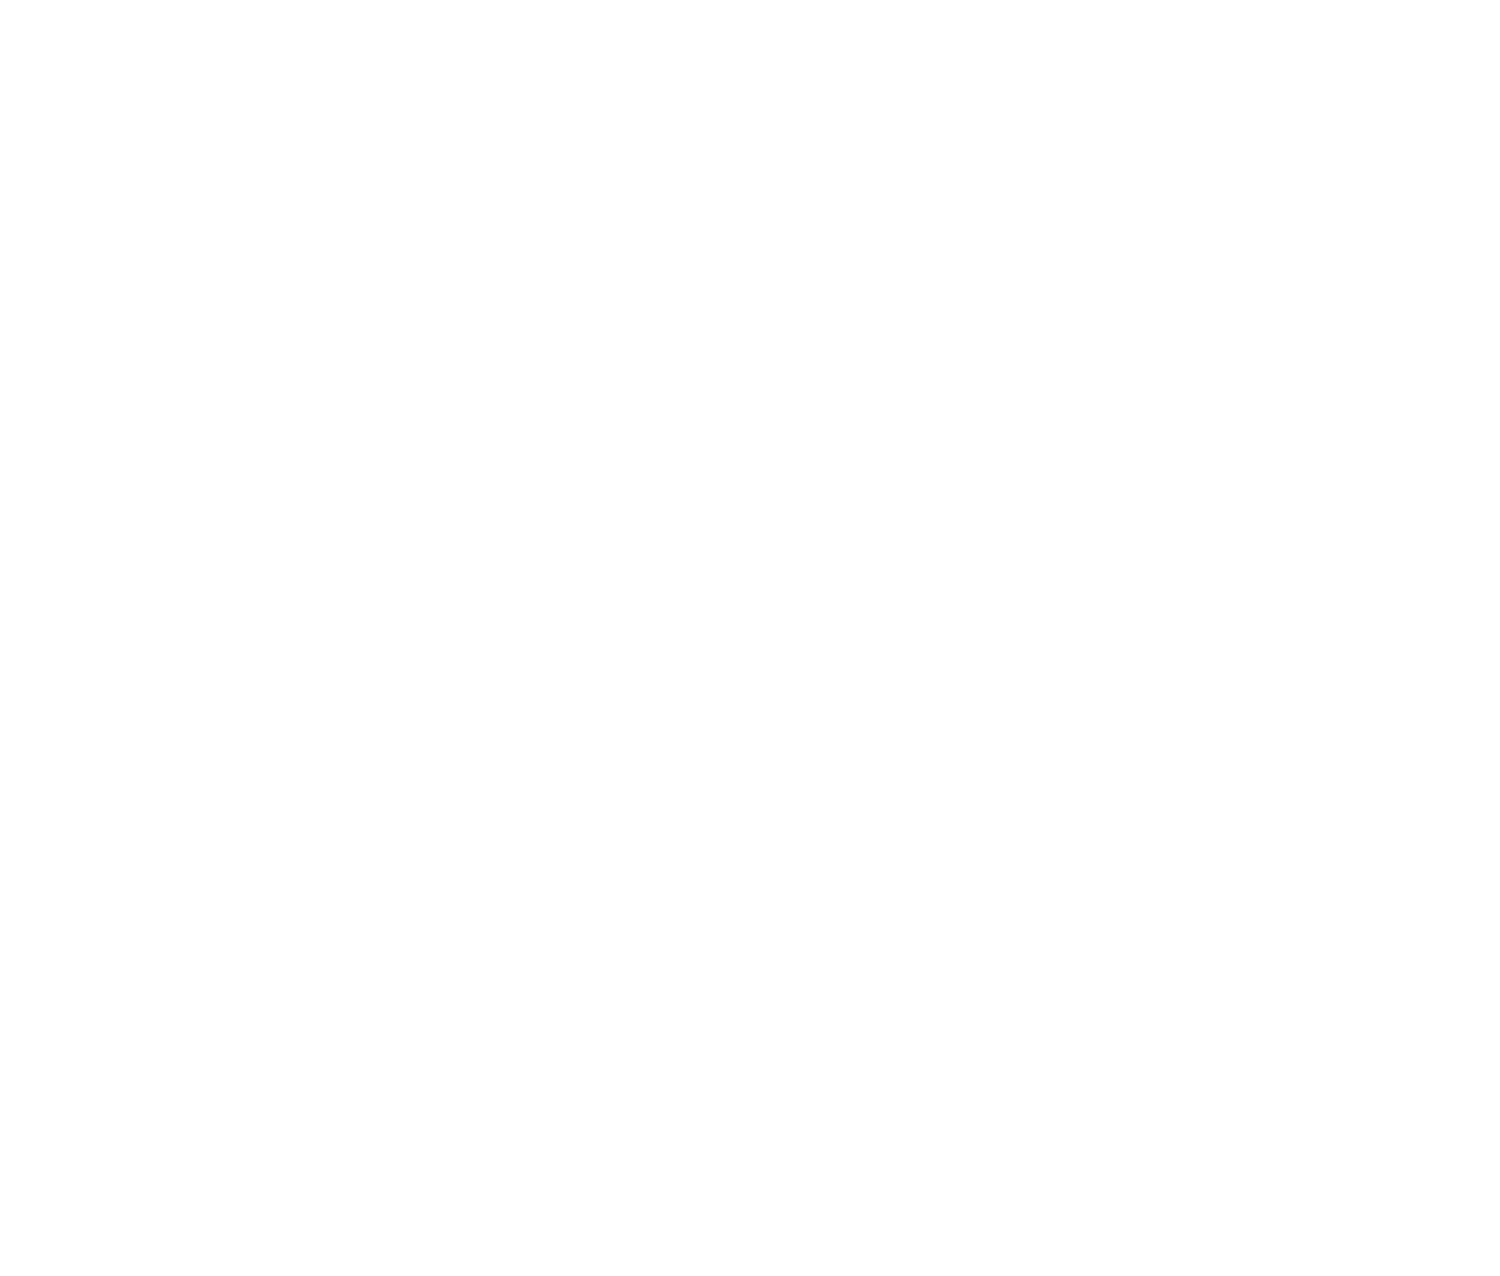 Hard Knox Brewery